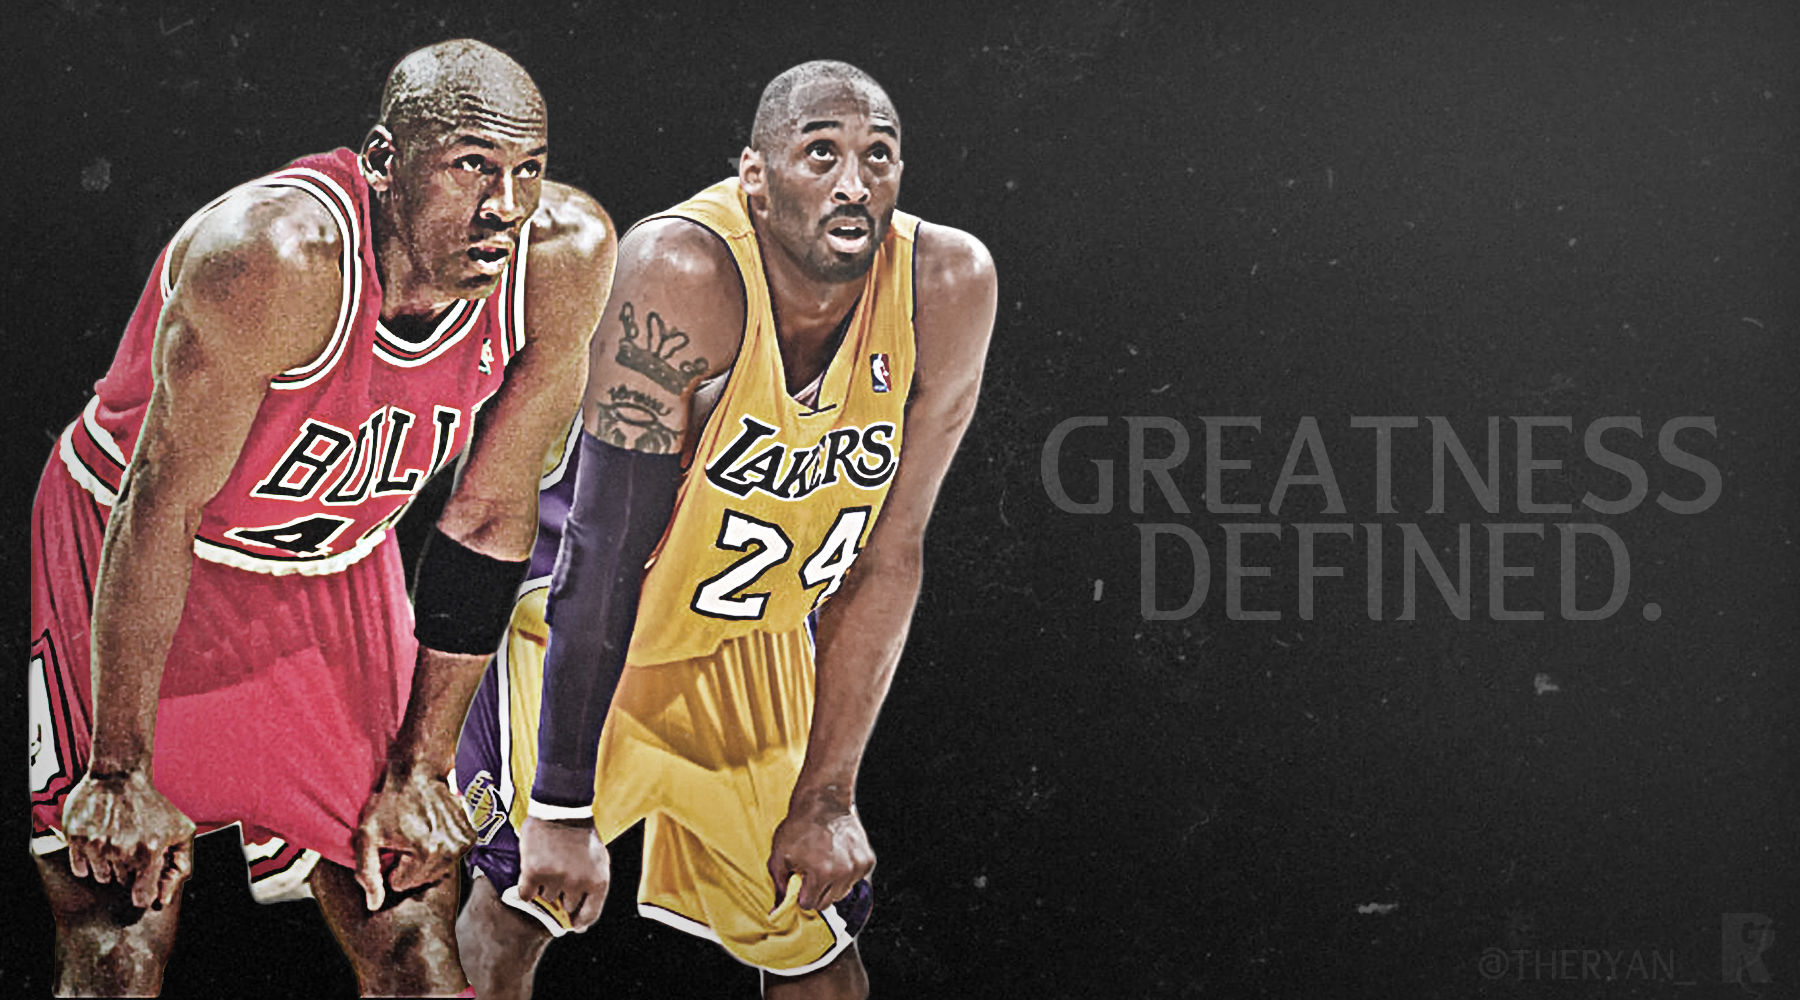 Kobe Bryant vs Michael Jordan Wallpaper  Kobe vs jordan Michael jordan  basketball Kobe bryant wallpaper